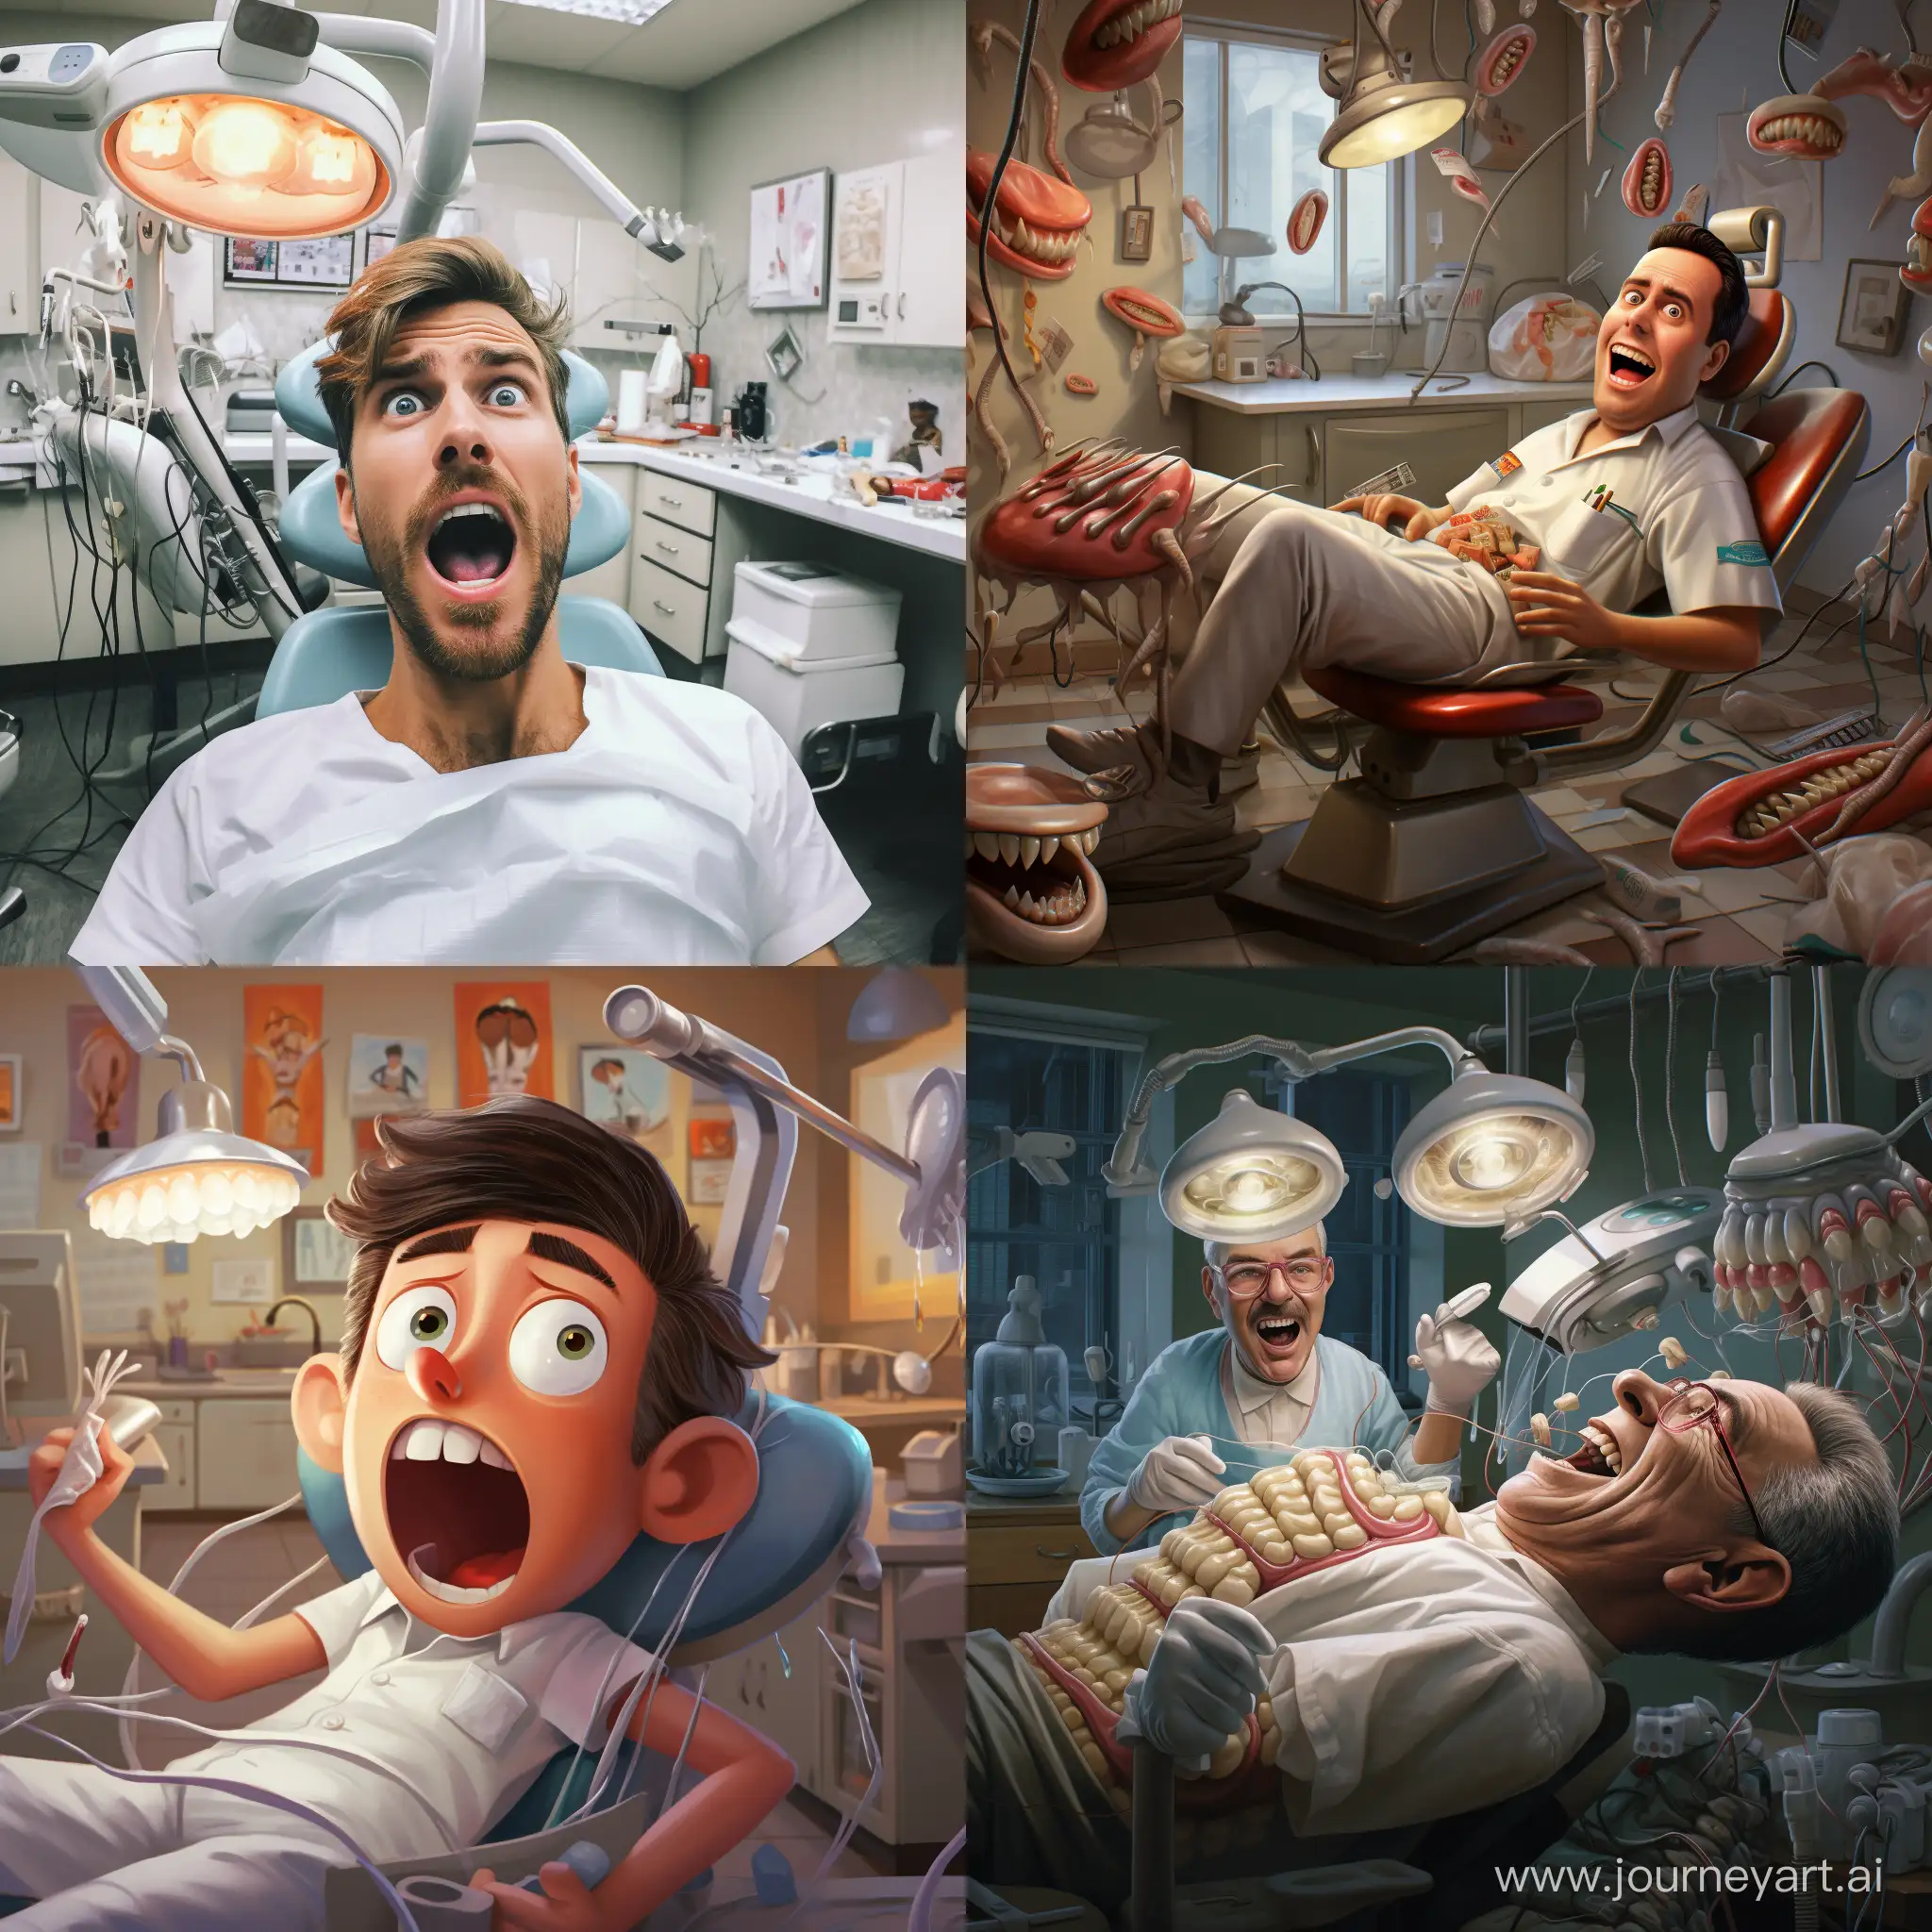 Dentist-SelfPortrait-Performing-Dental-Procedure-with-AR-Enhancement